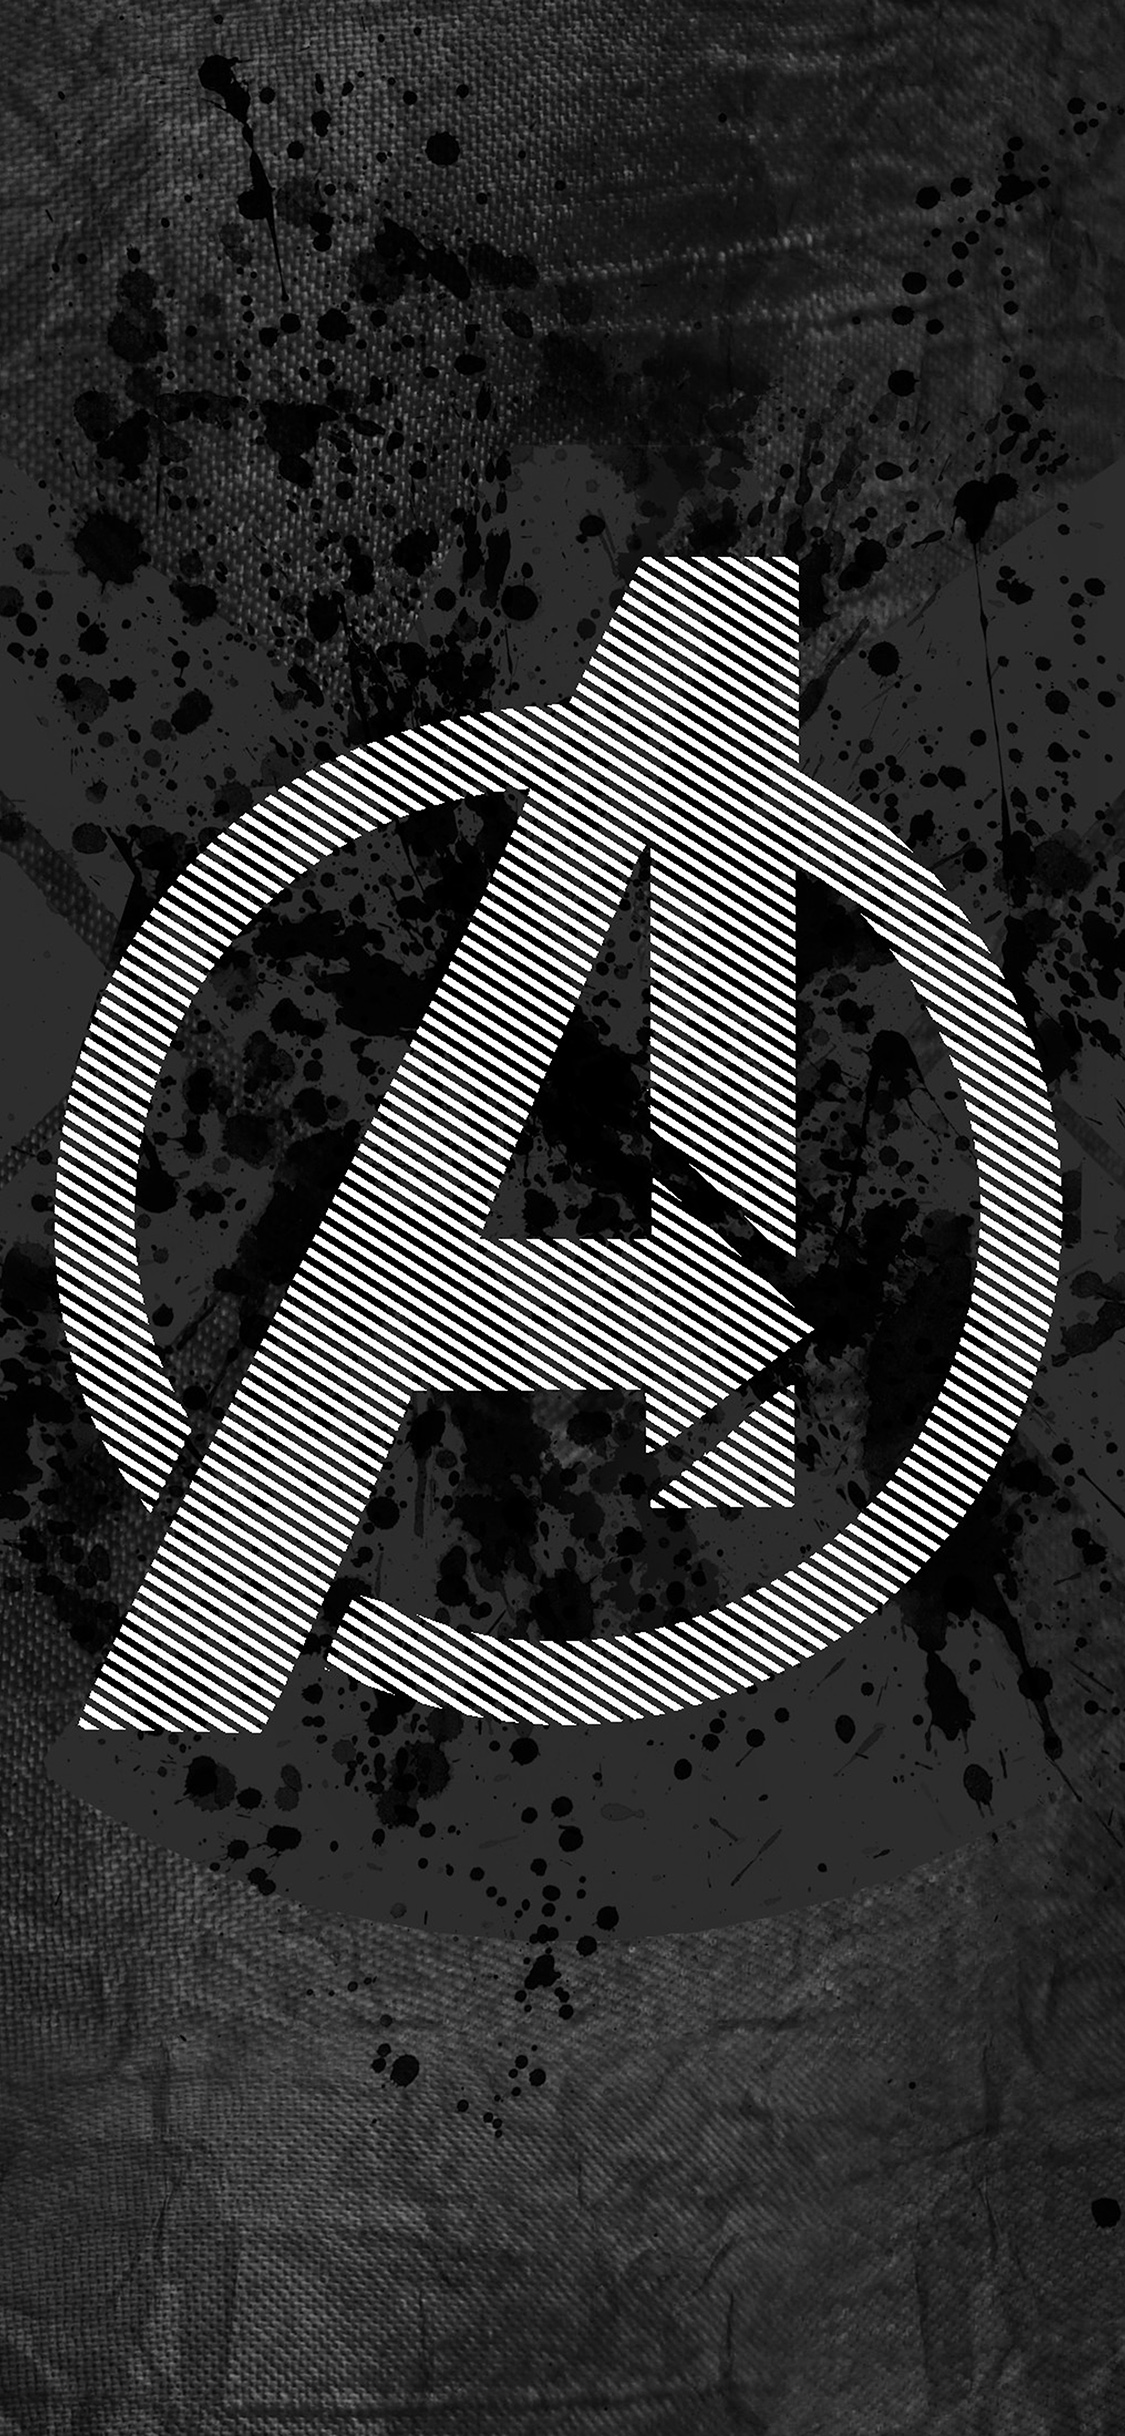 Avengers logo art iPhone X Wallpaper Free Download